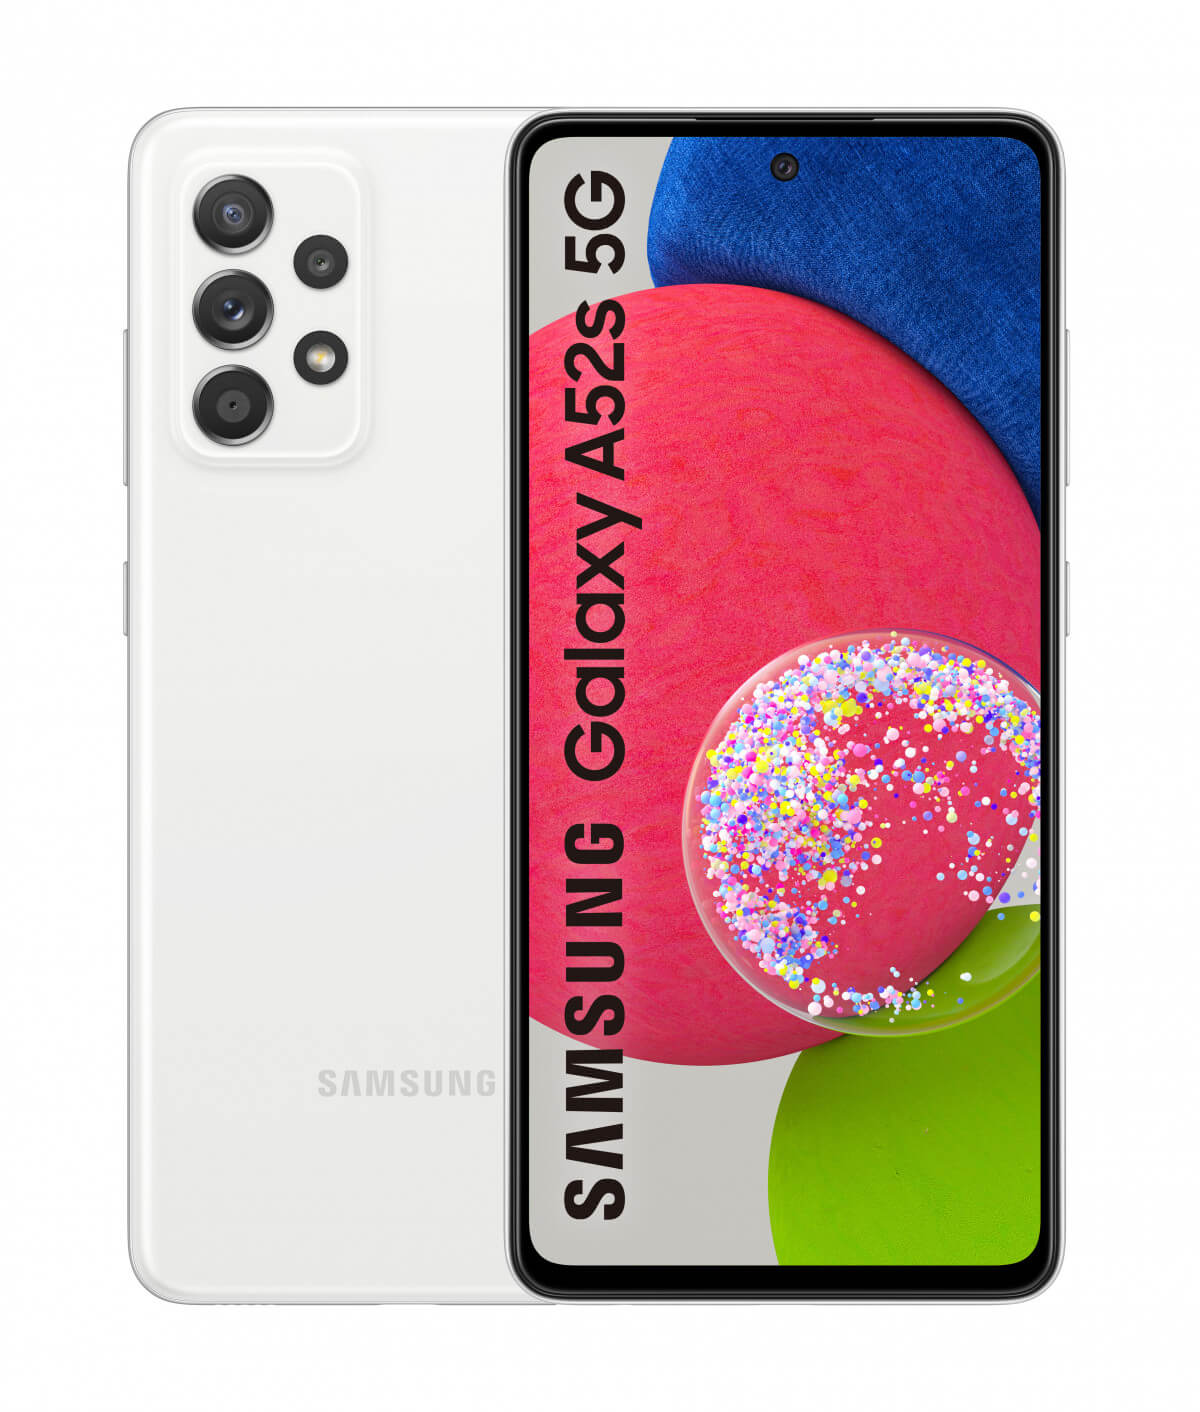 SAMSUNG Galaxy A52s 5G